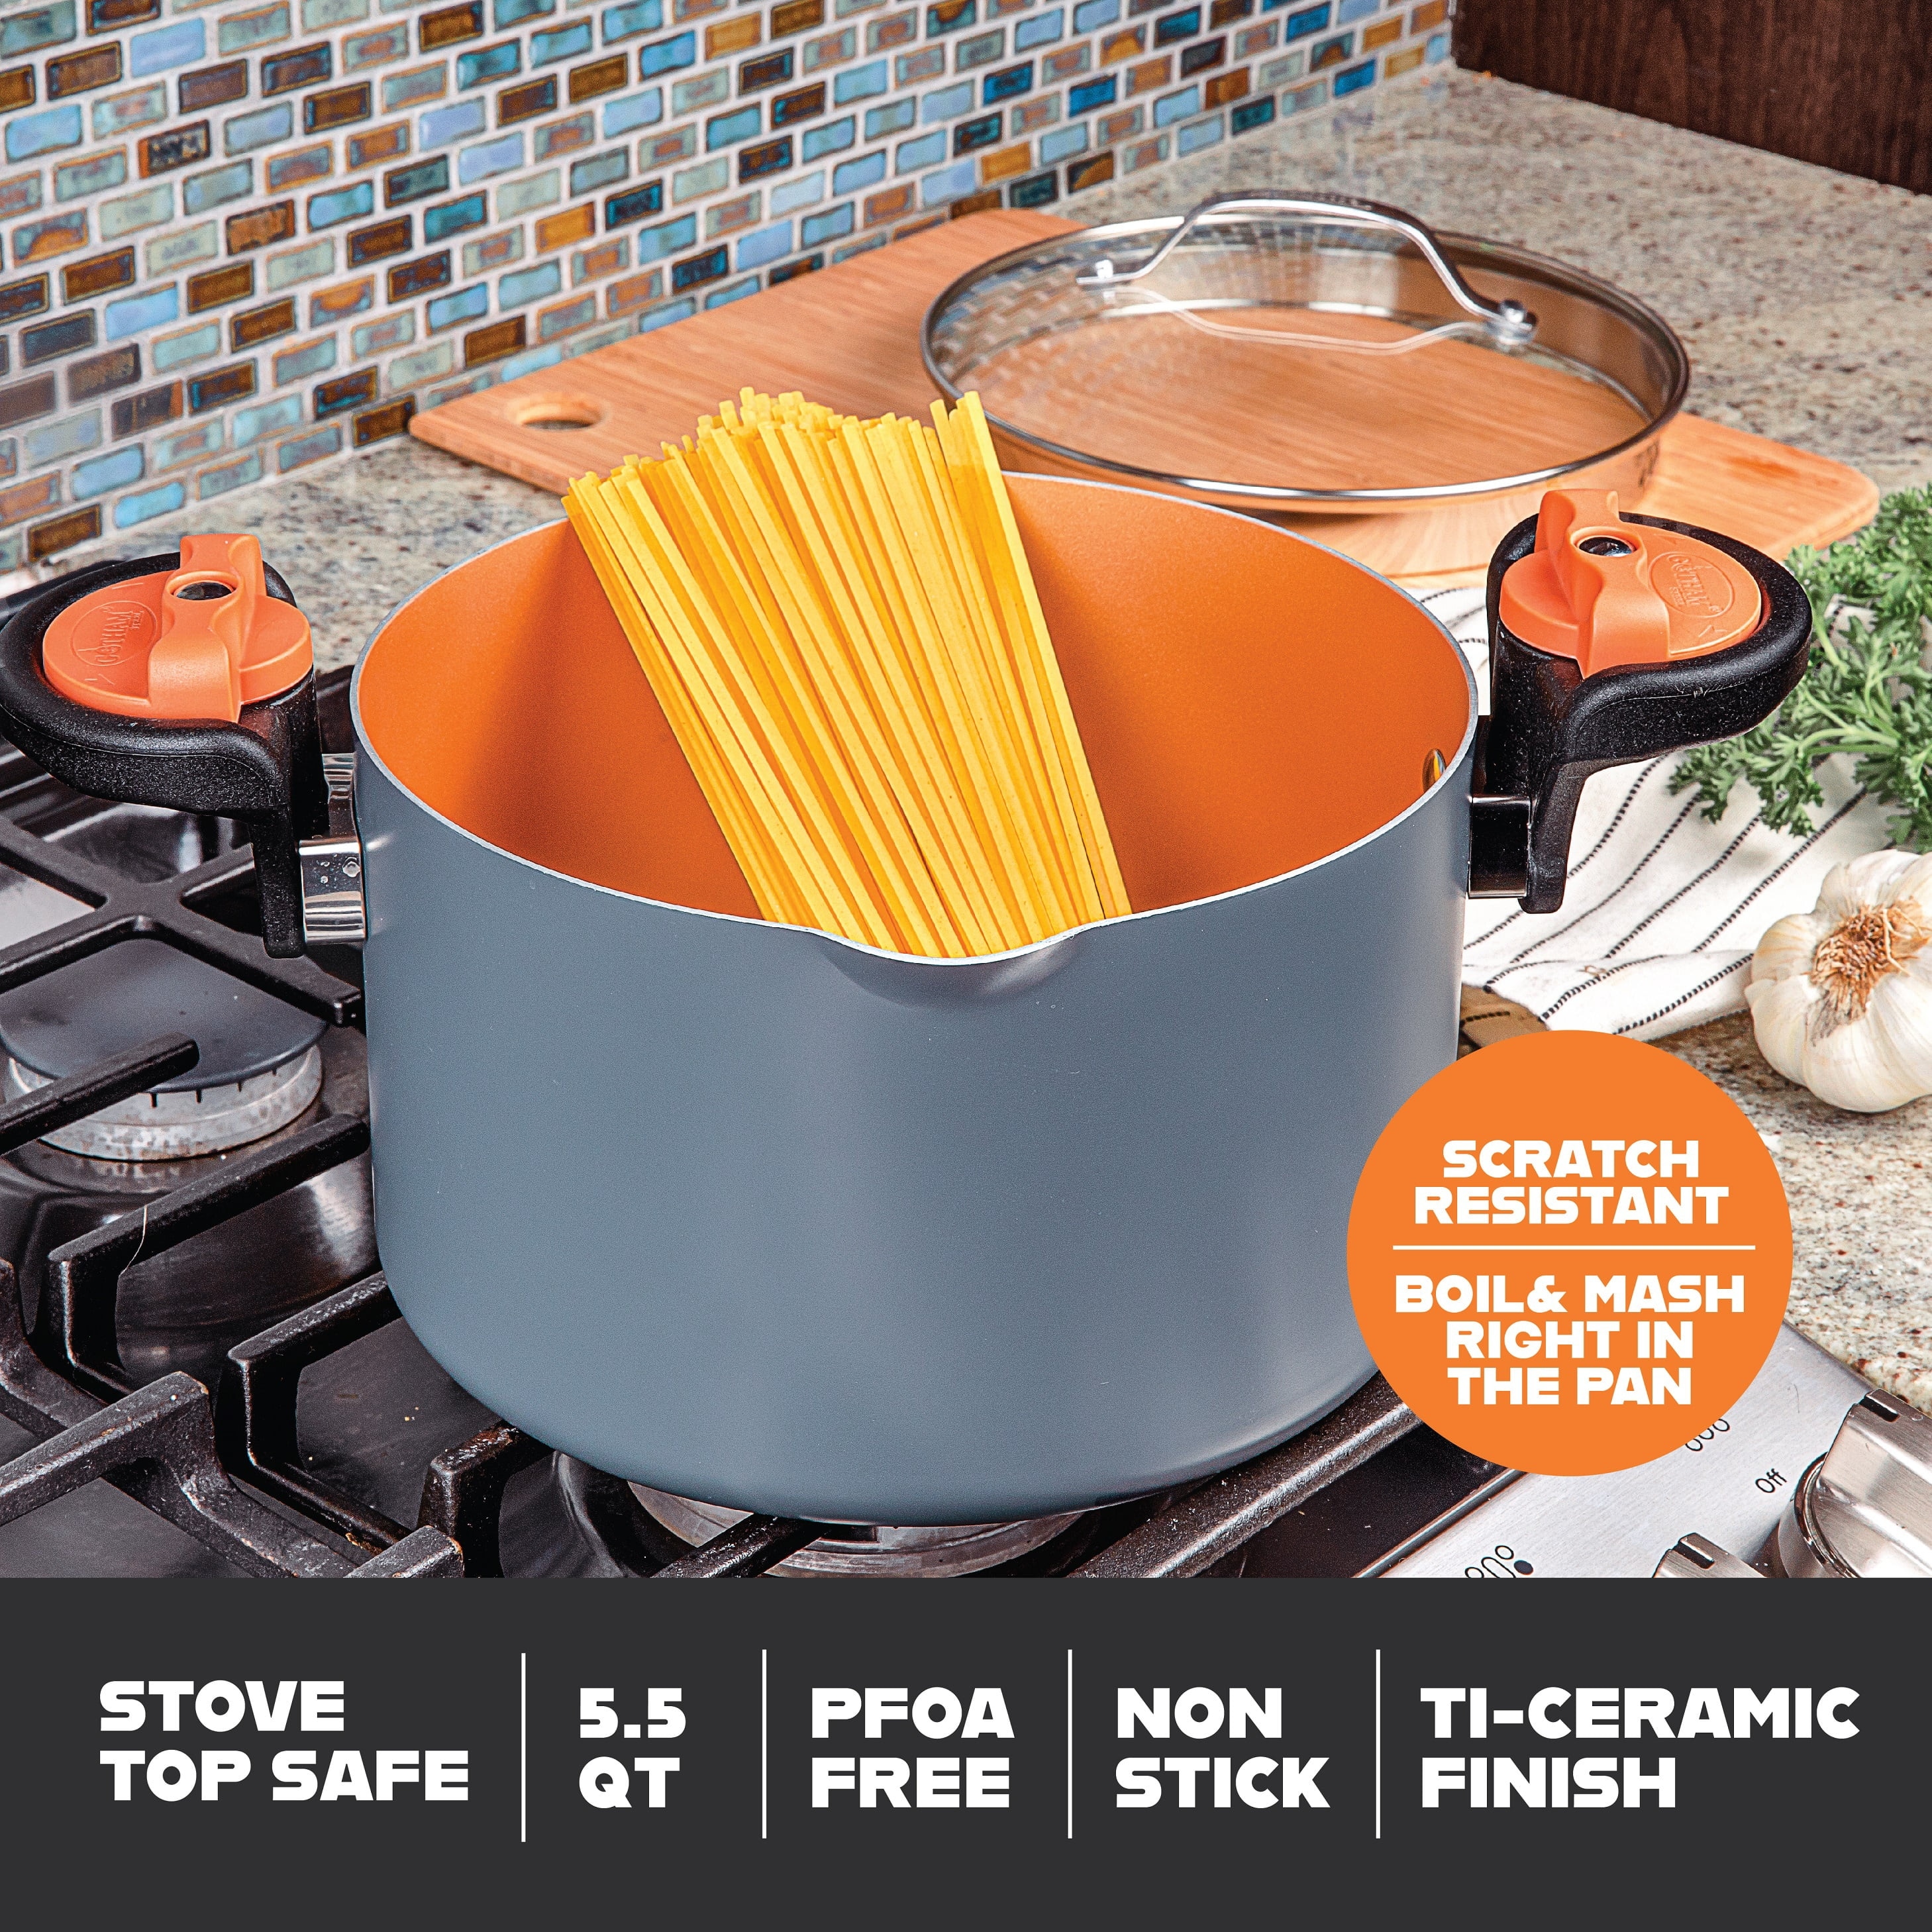 Gotham Steel Pasta Pot TV Spot, 'Perfect Straining: Free Fry Basket